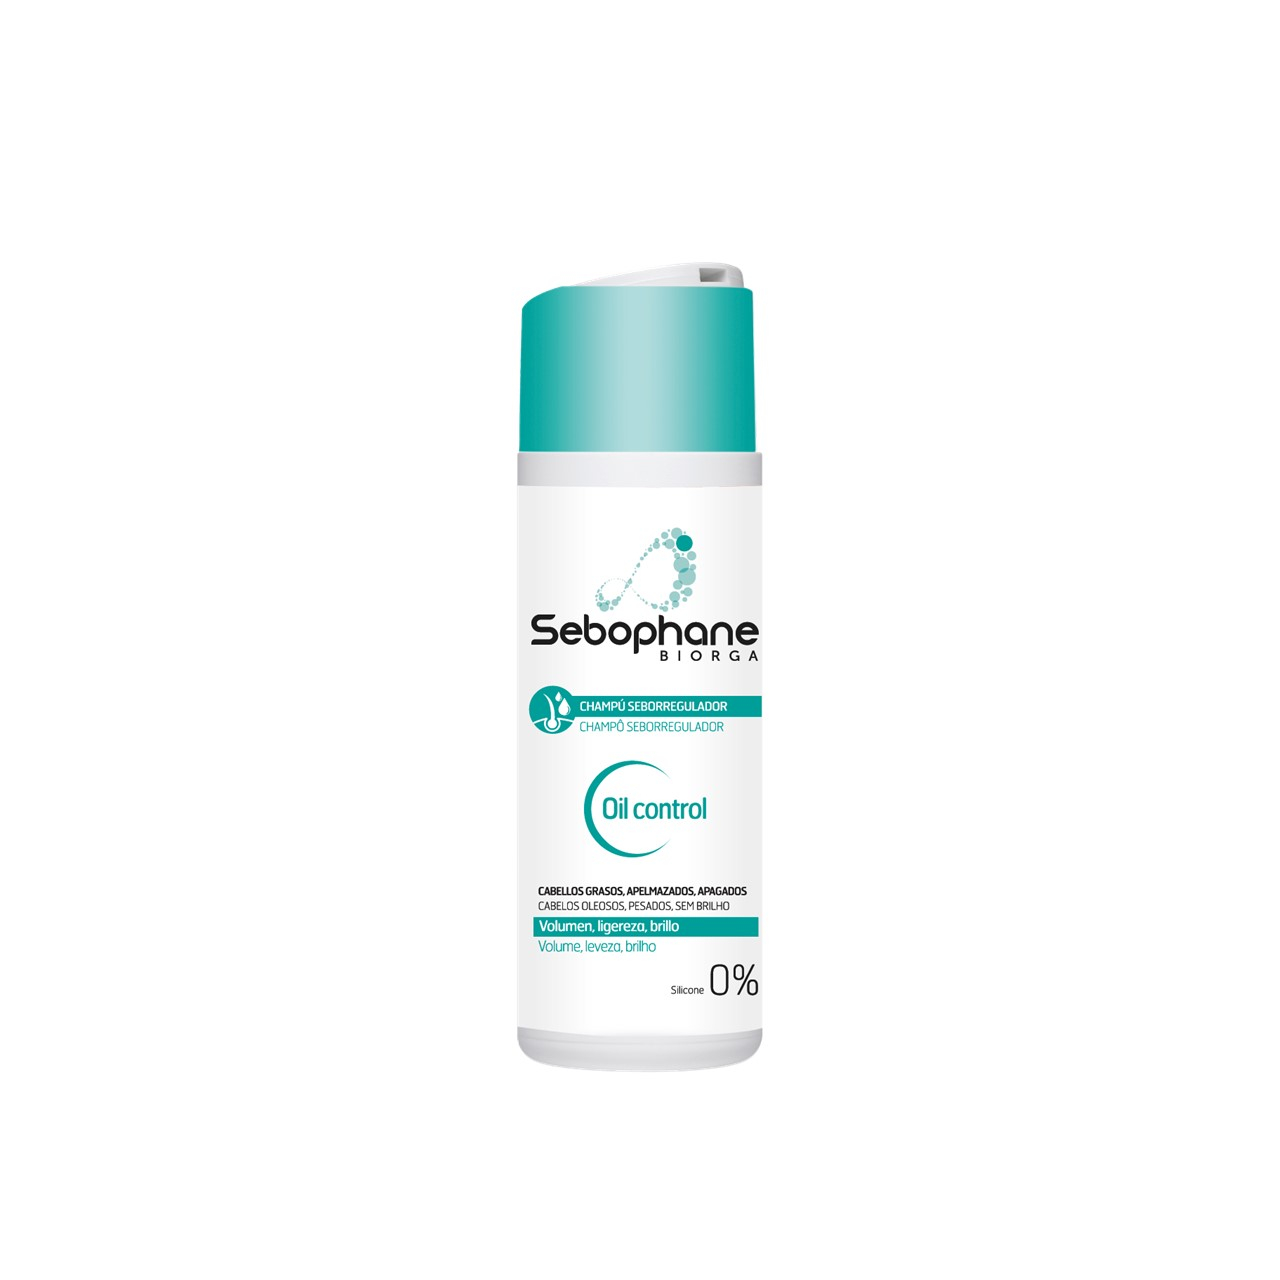 Sebophane Regulating Oil Control Shampoo 200ml (6.76fl oz)